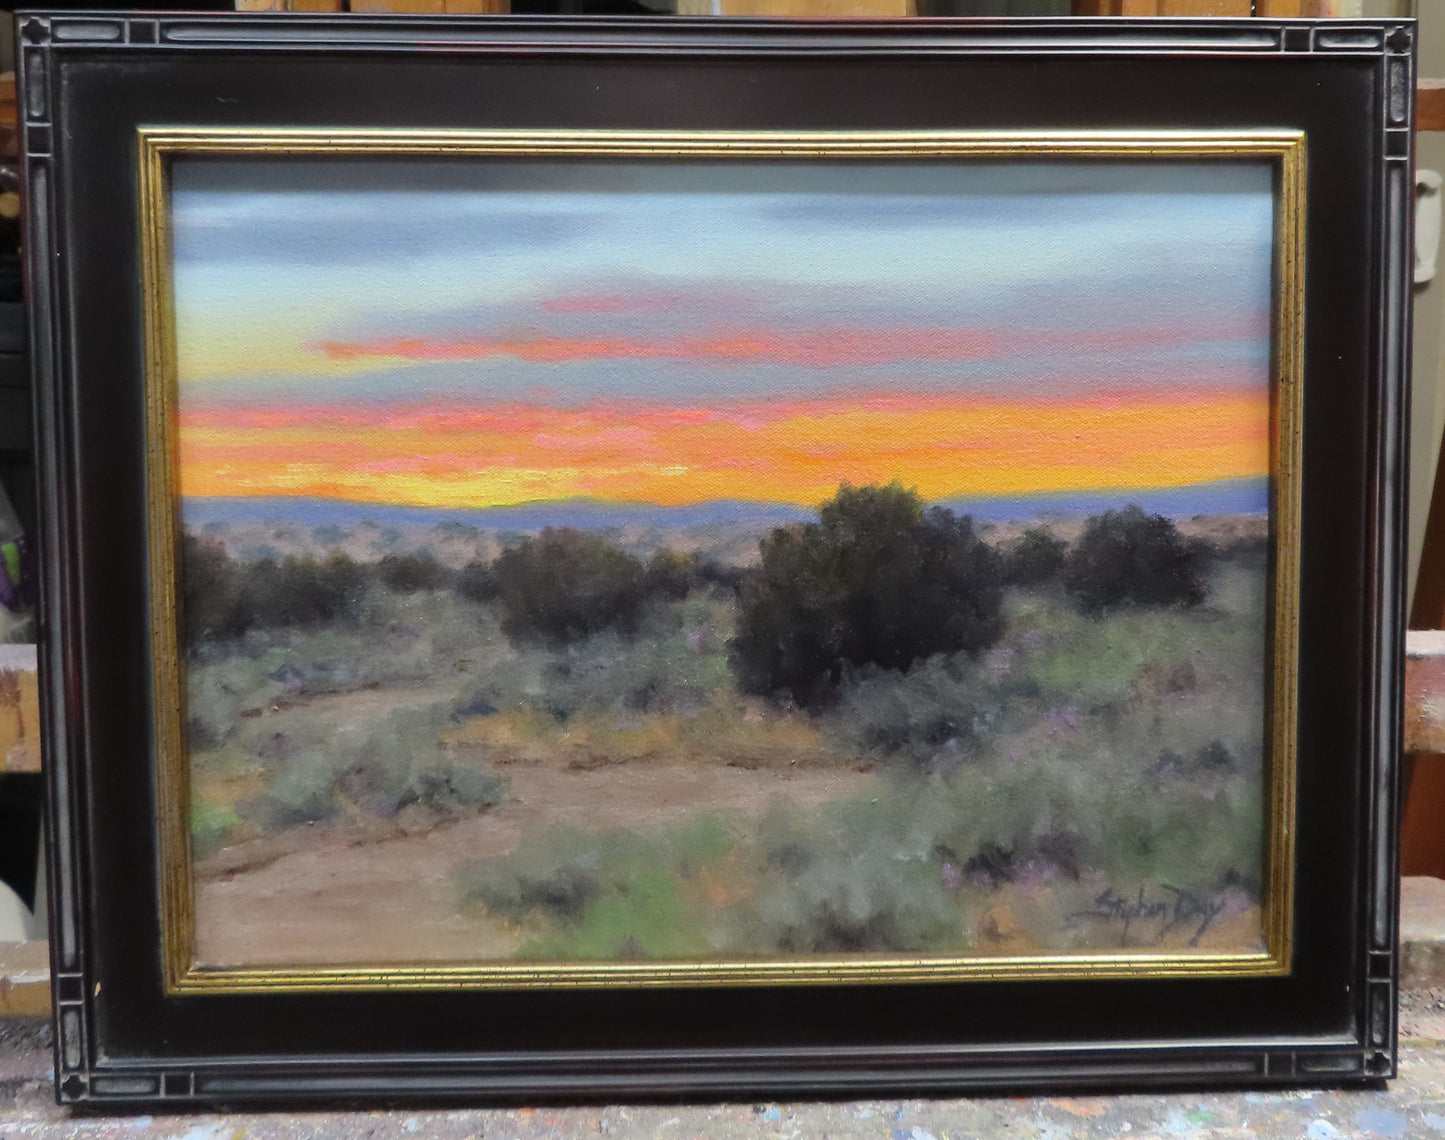 North of Santa Fe-Painting-Stephen Day-Sorrel Sky Gallery